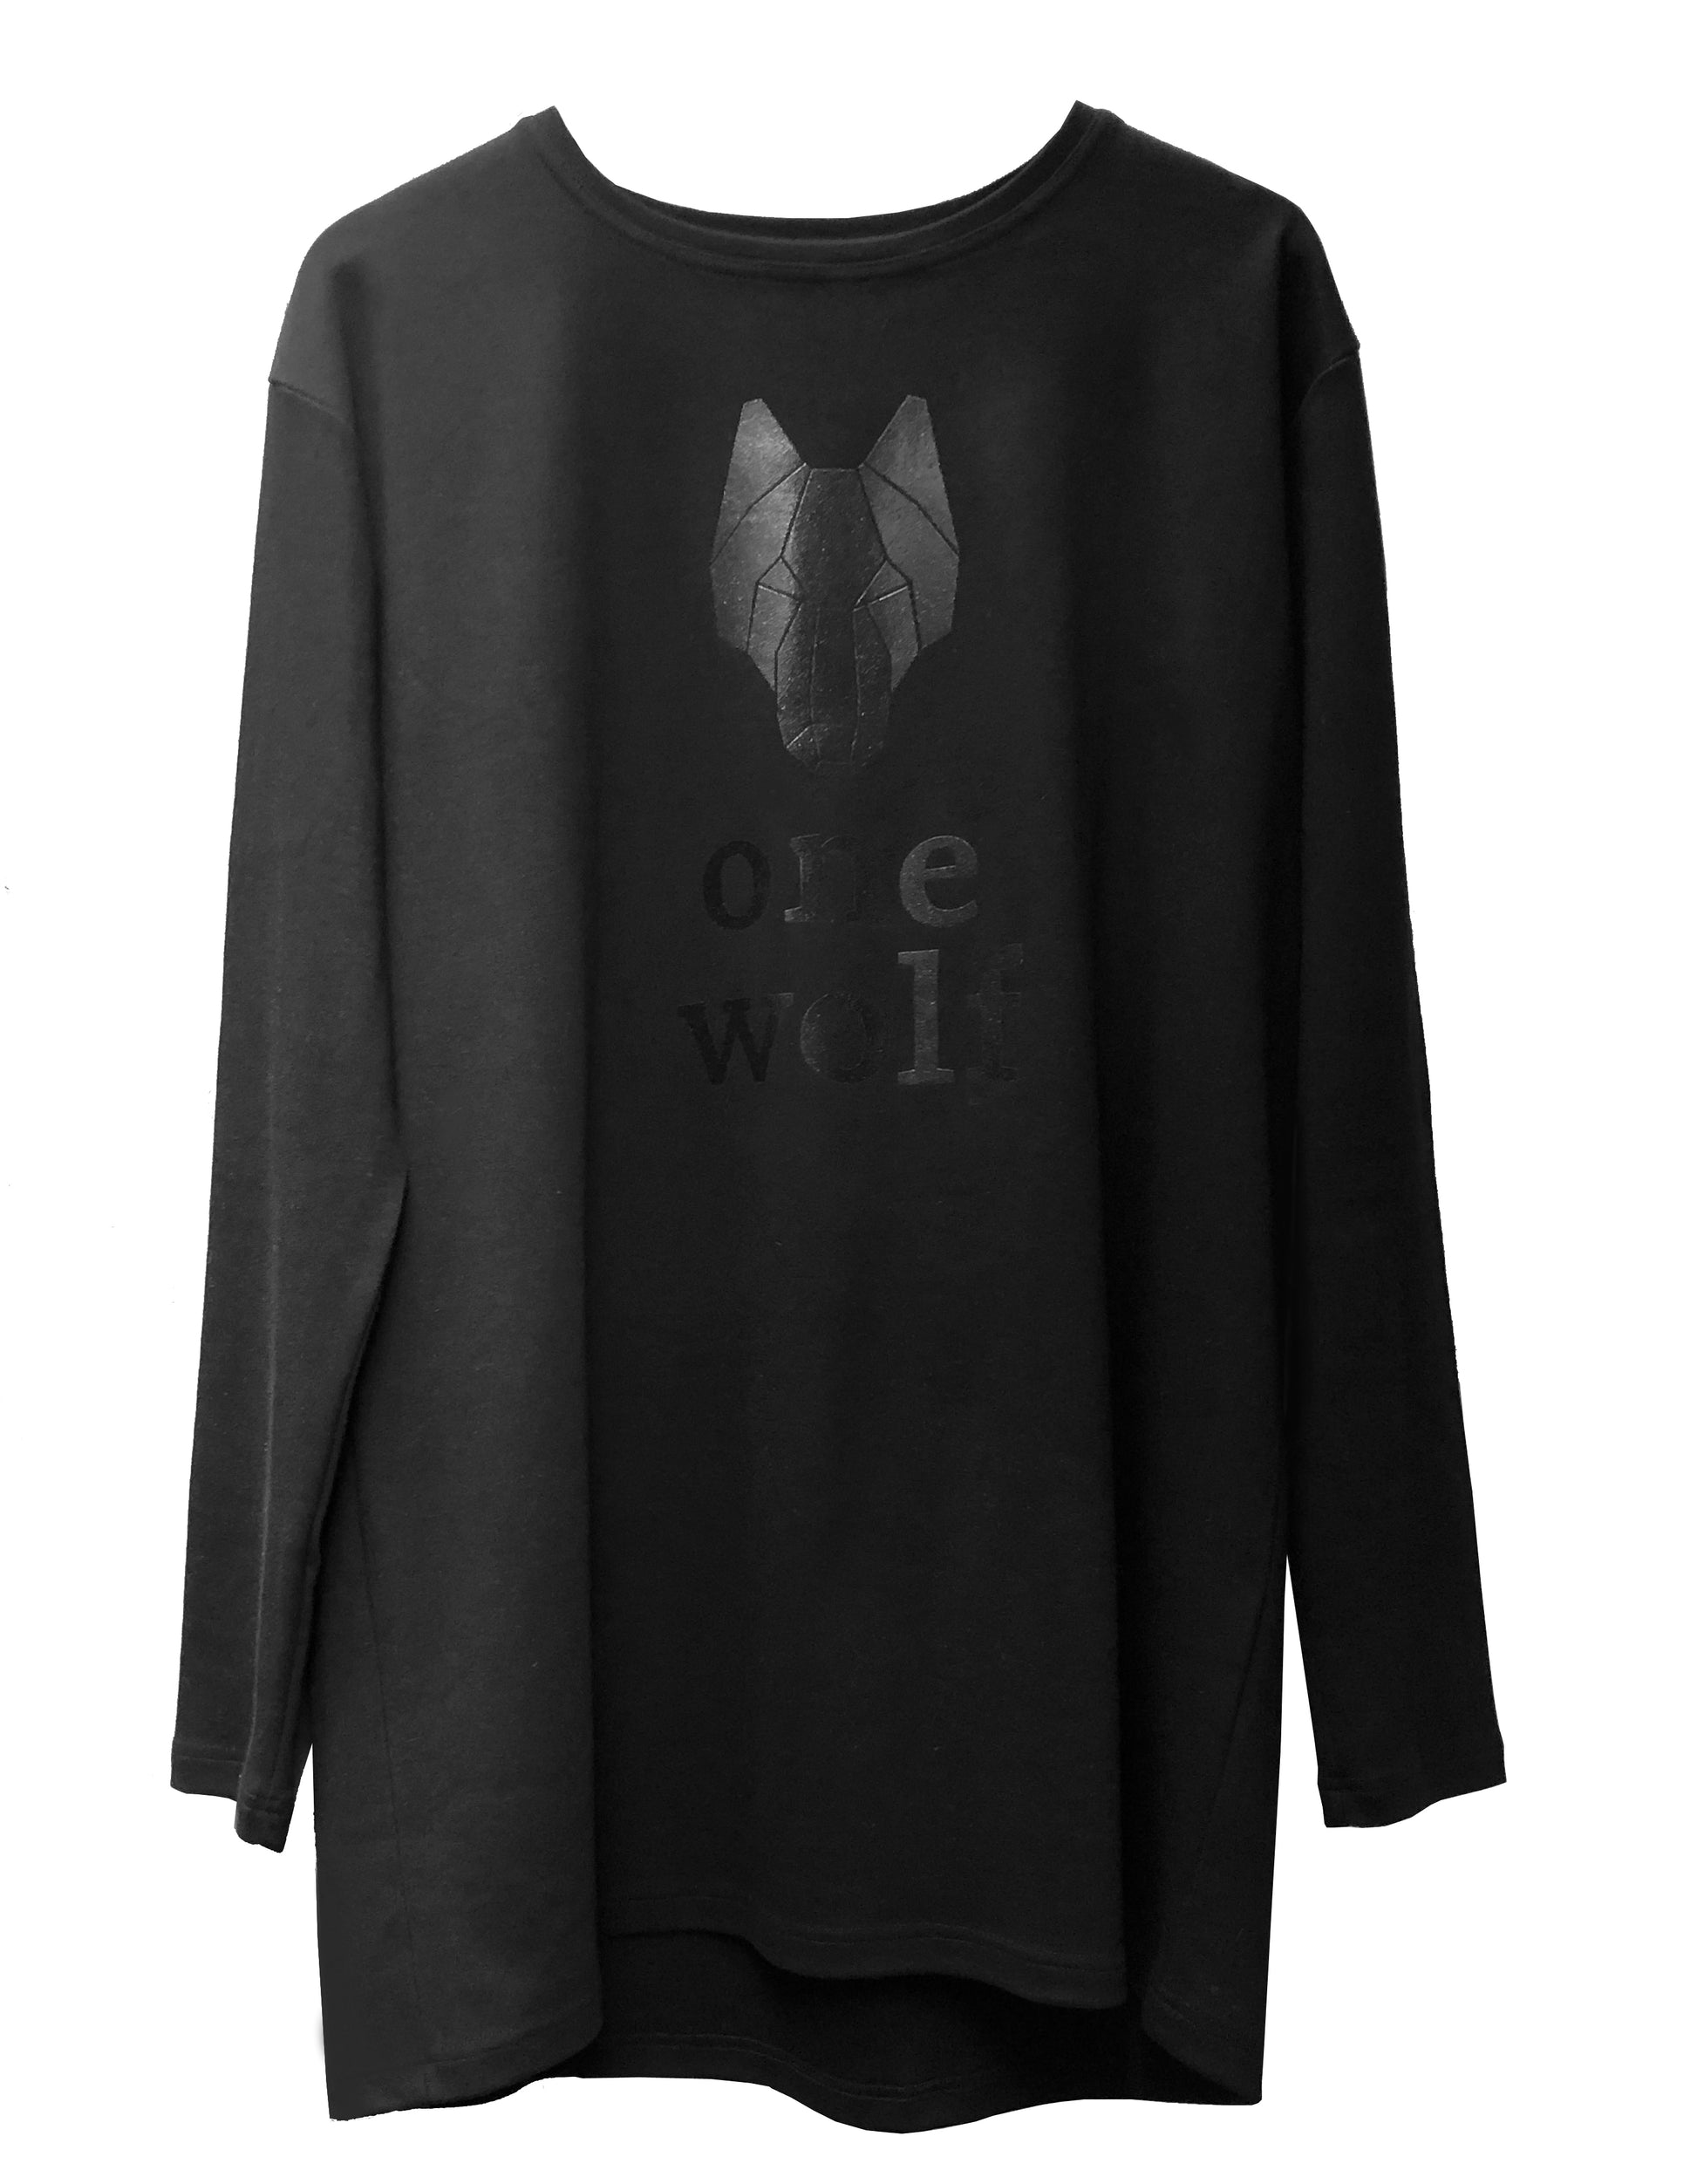 One Wolf long sleeves LOGO T-Shirt black/black gloss